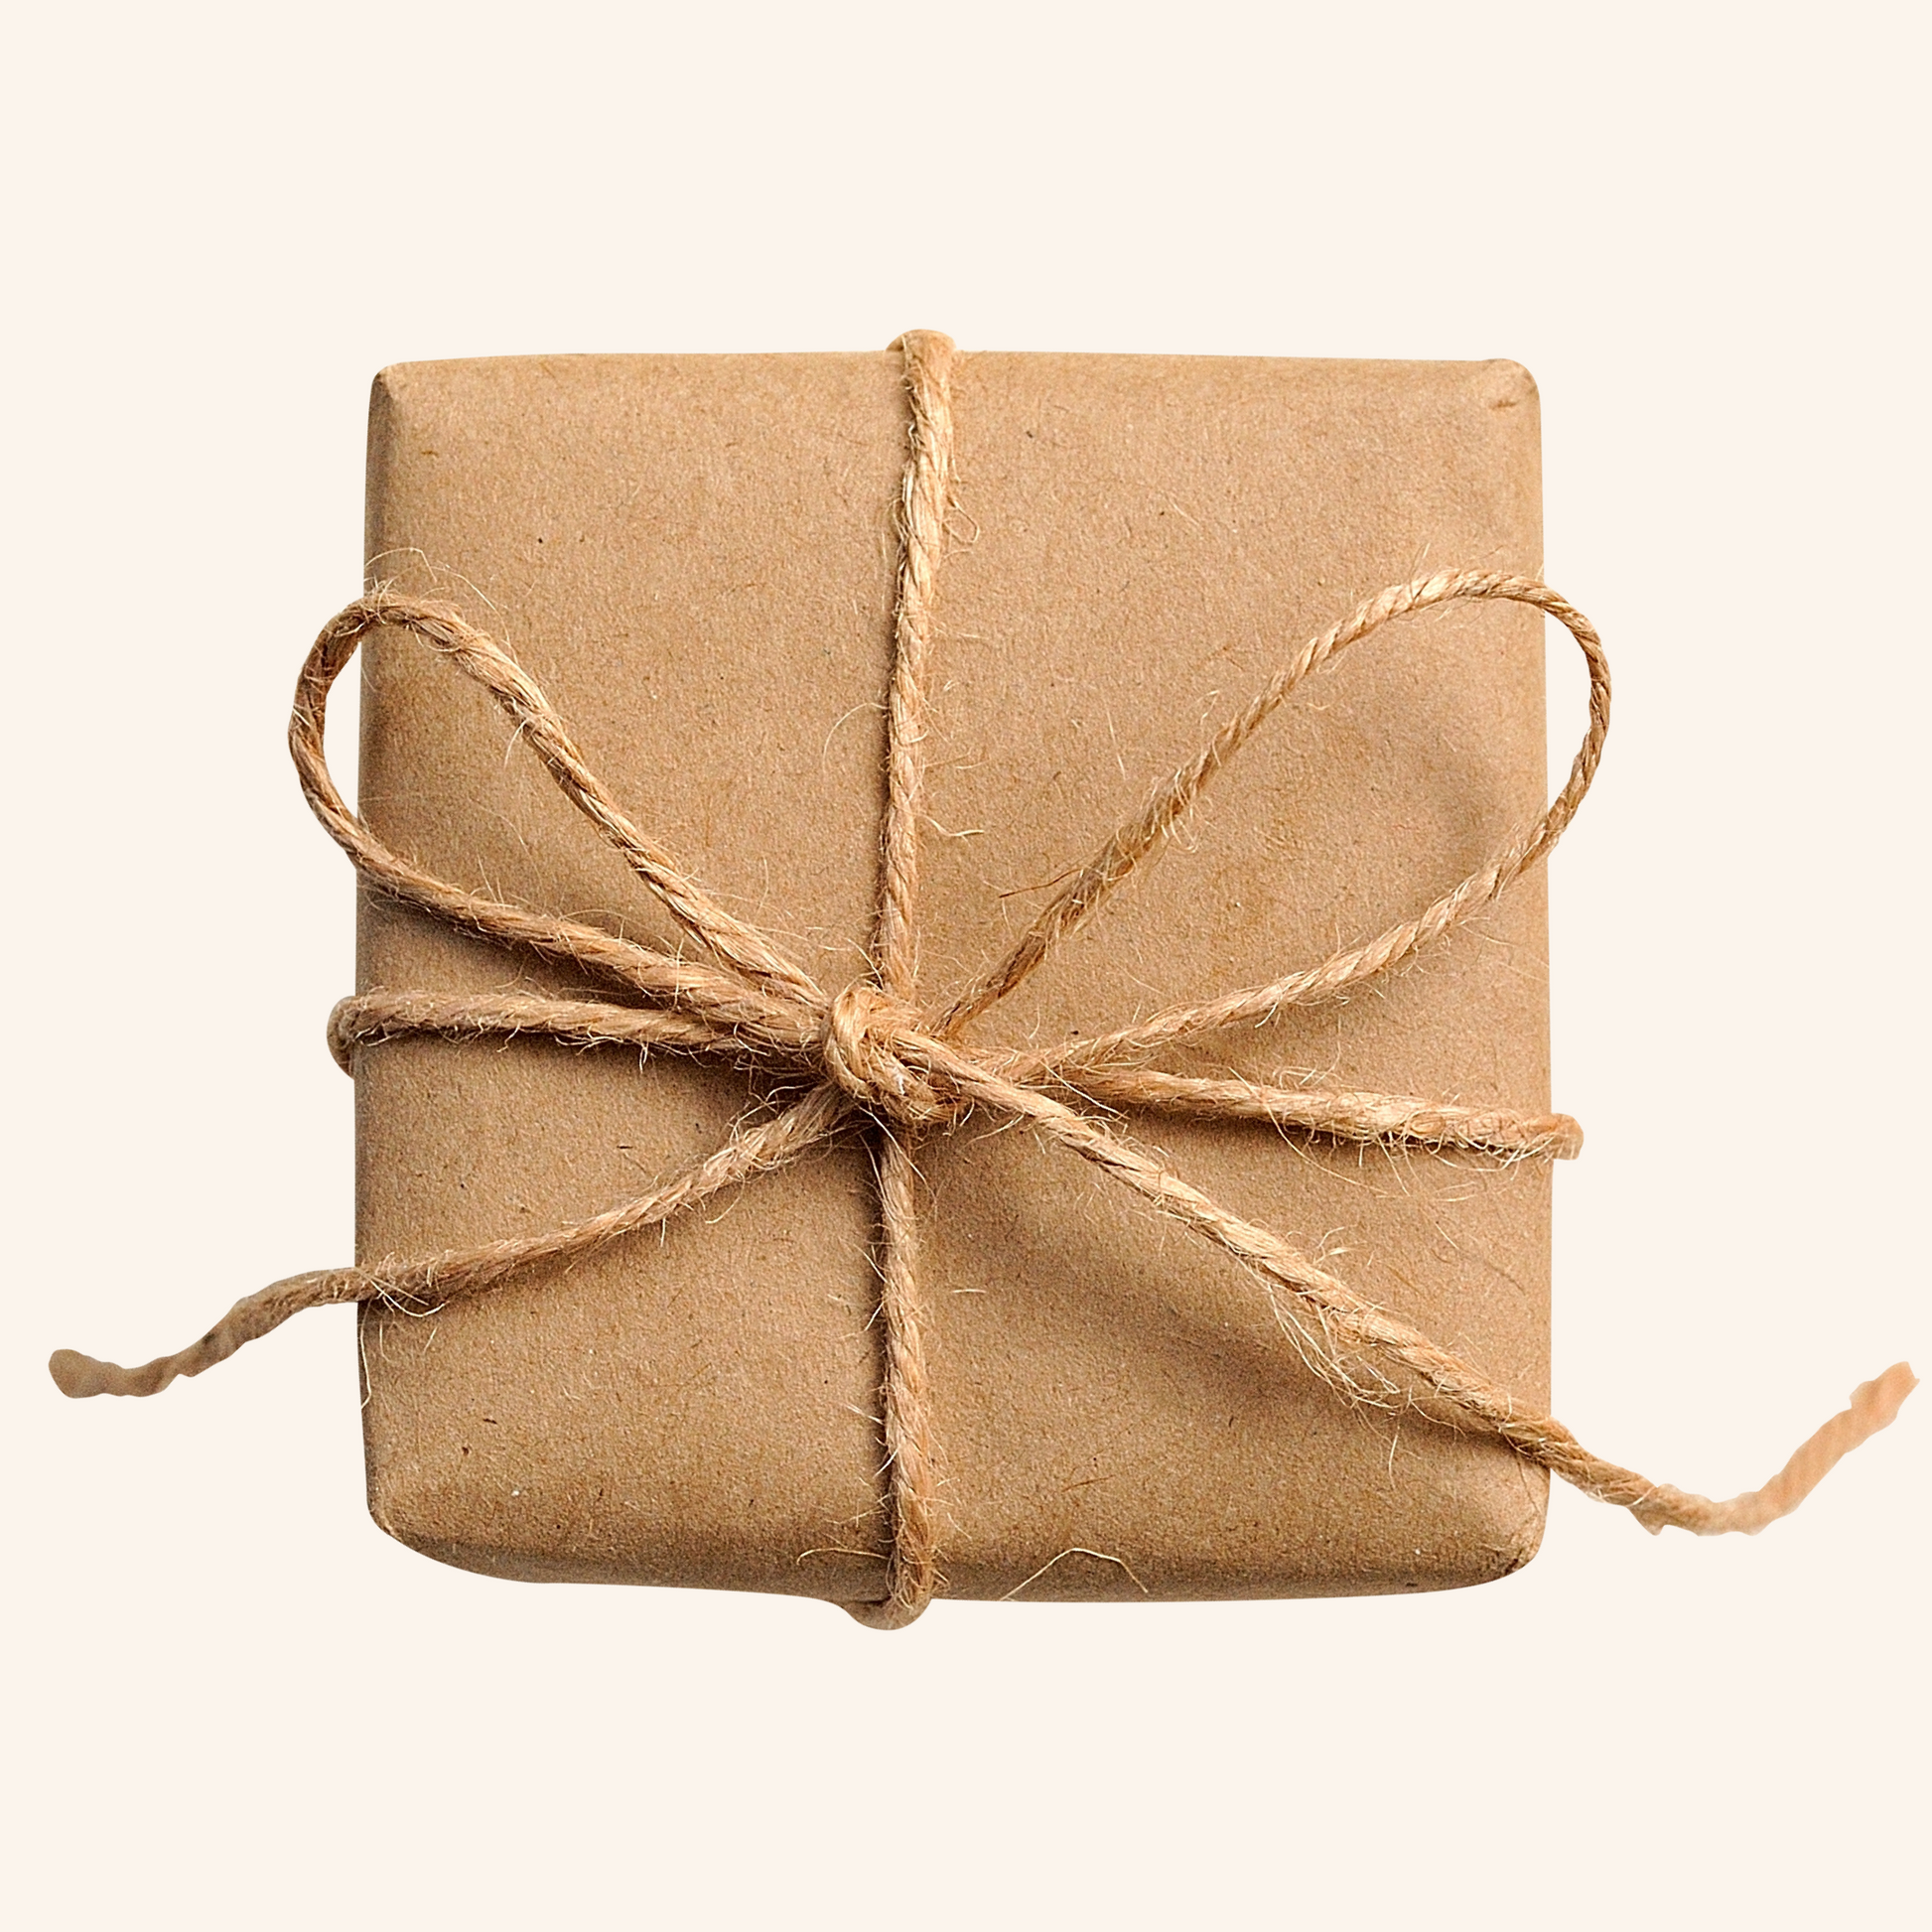 Emballage cadeau style colis postal, ficelle tricolore, DYI, kraft